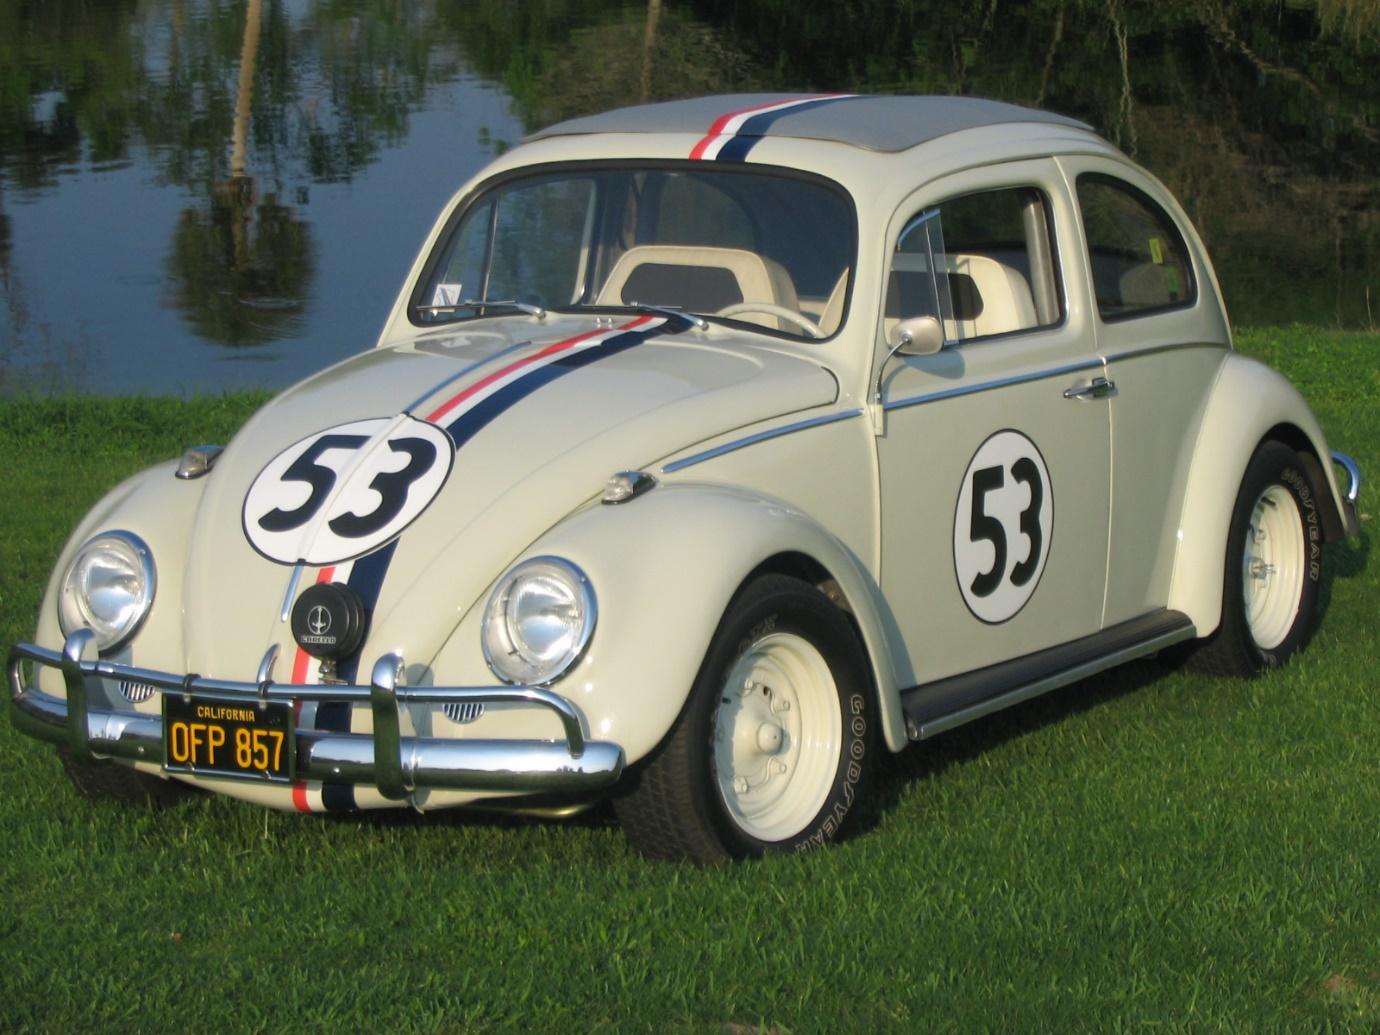 Herbie - Wikipedia